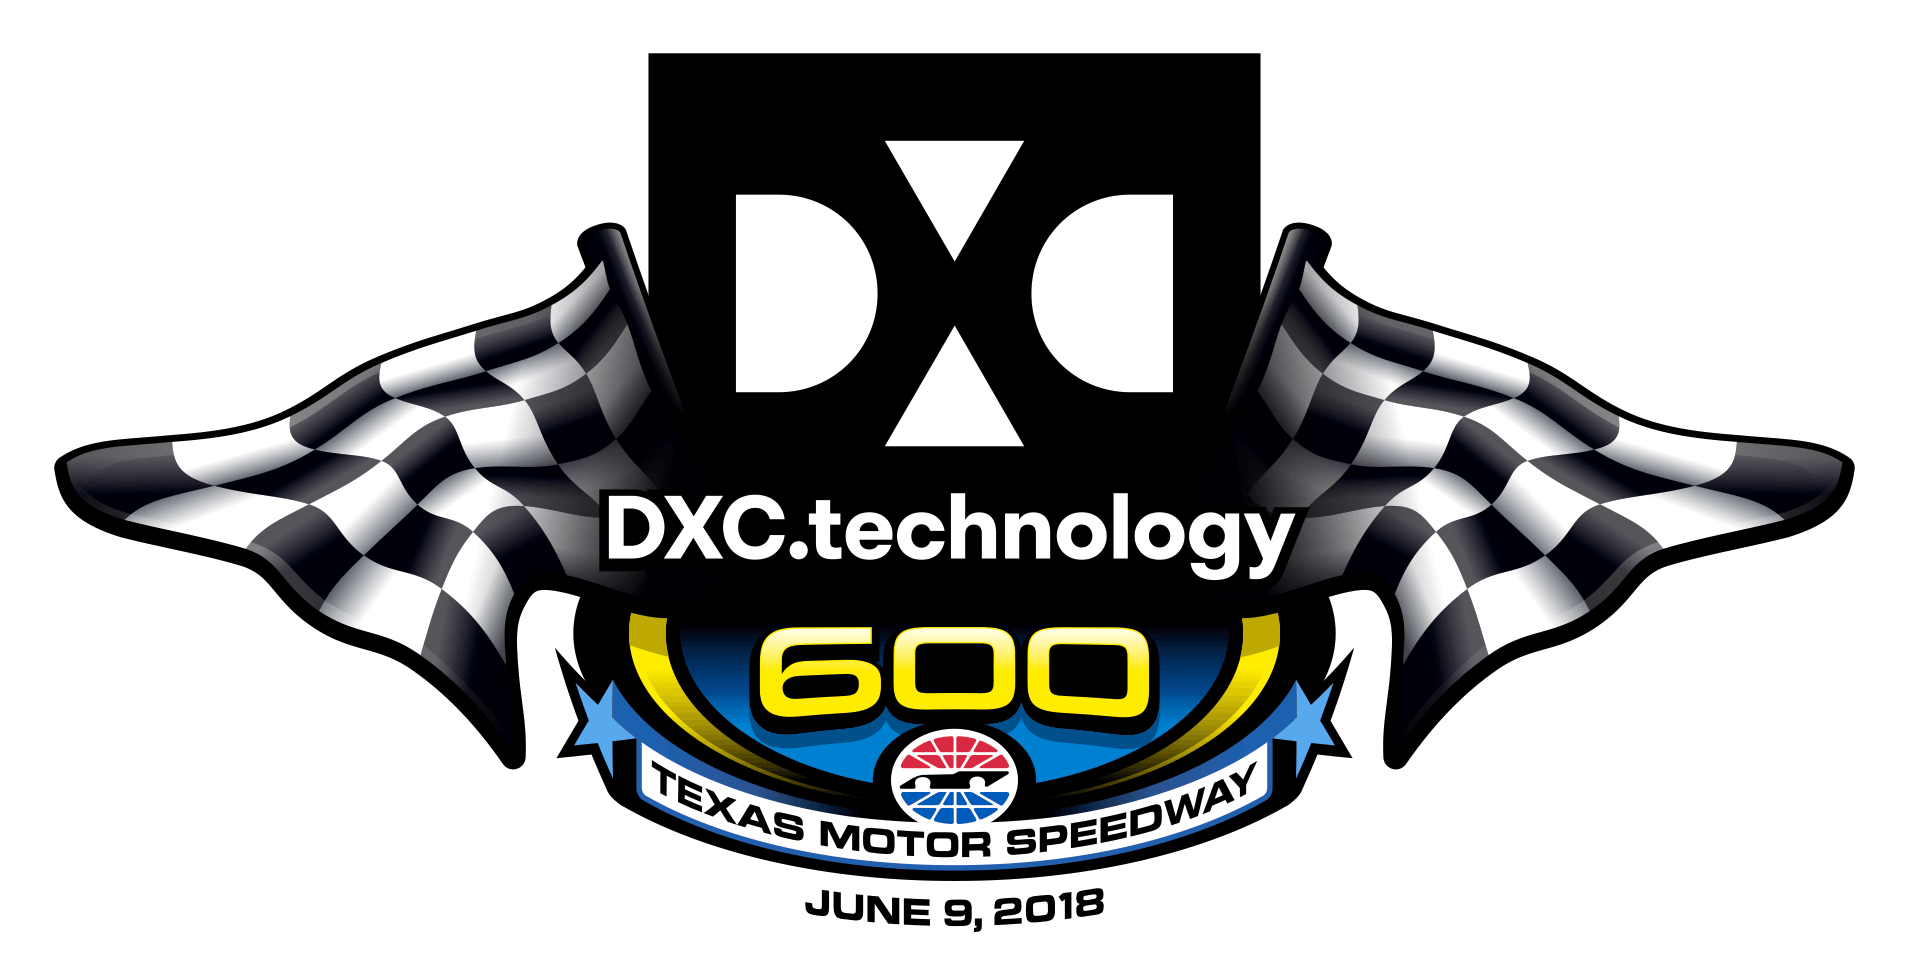 Dxc Technology Logo - DXC Technology 600 Racing Series